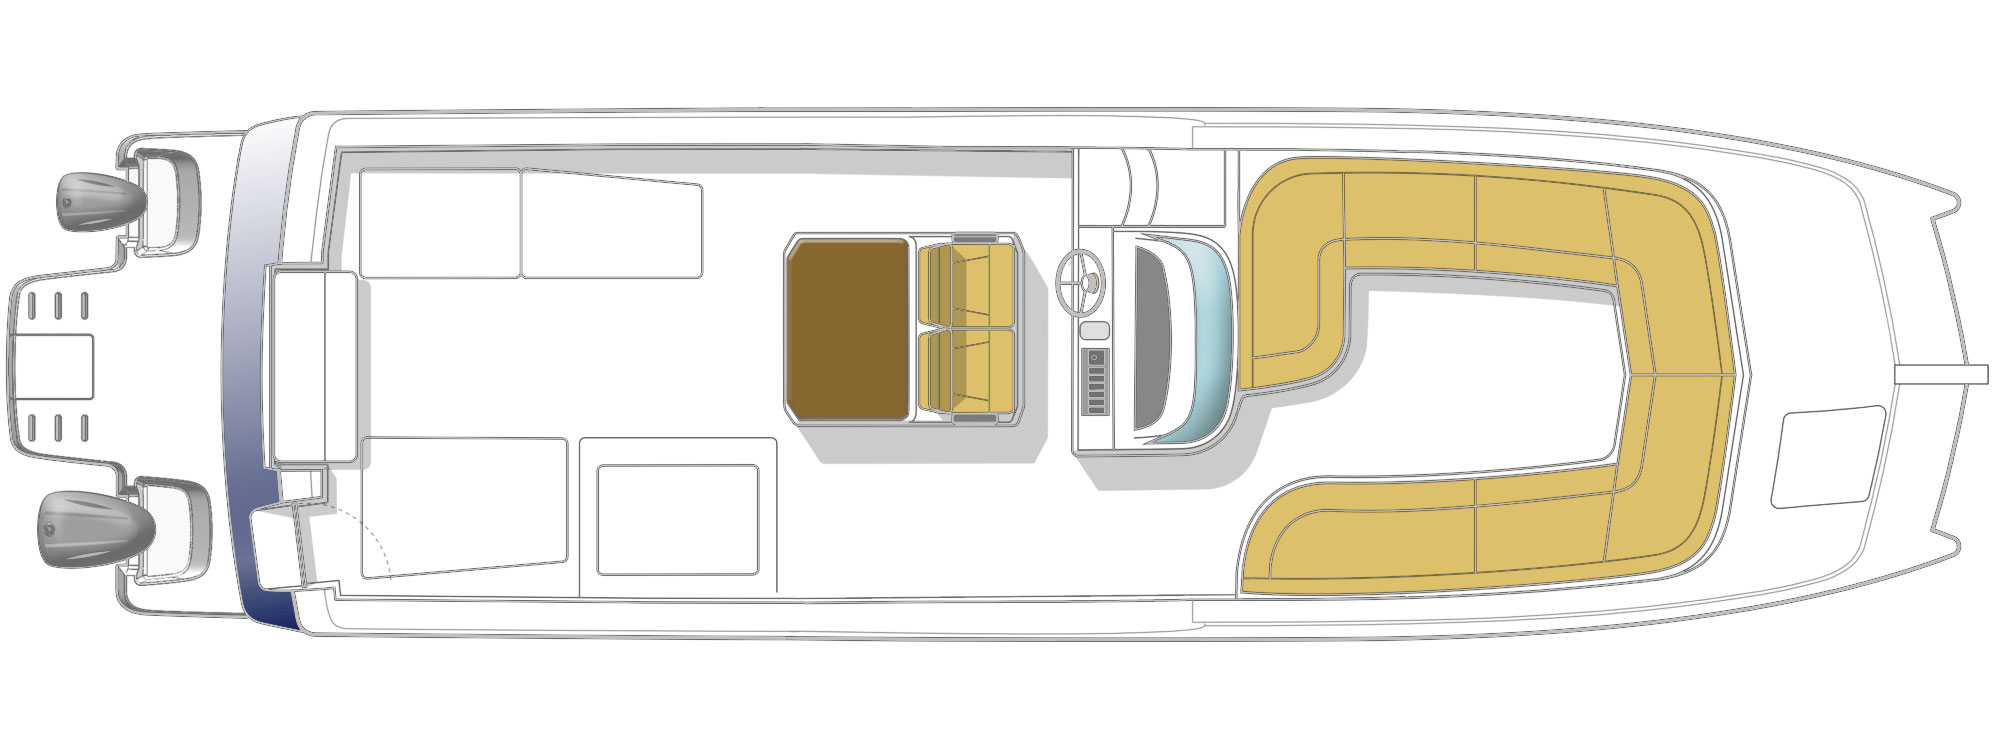 aspen deck layout diagram